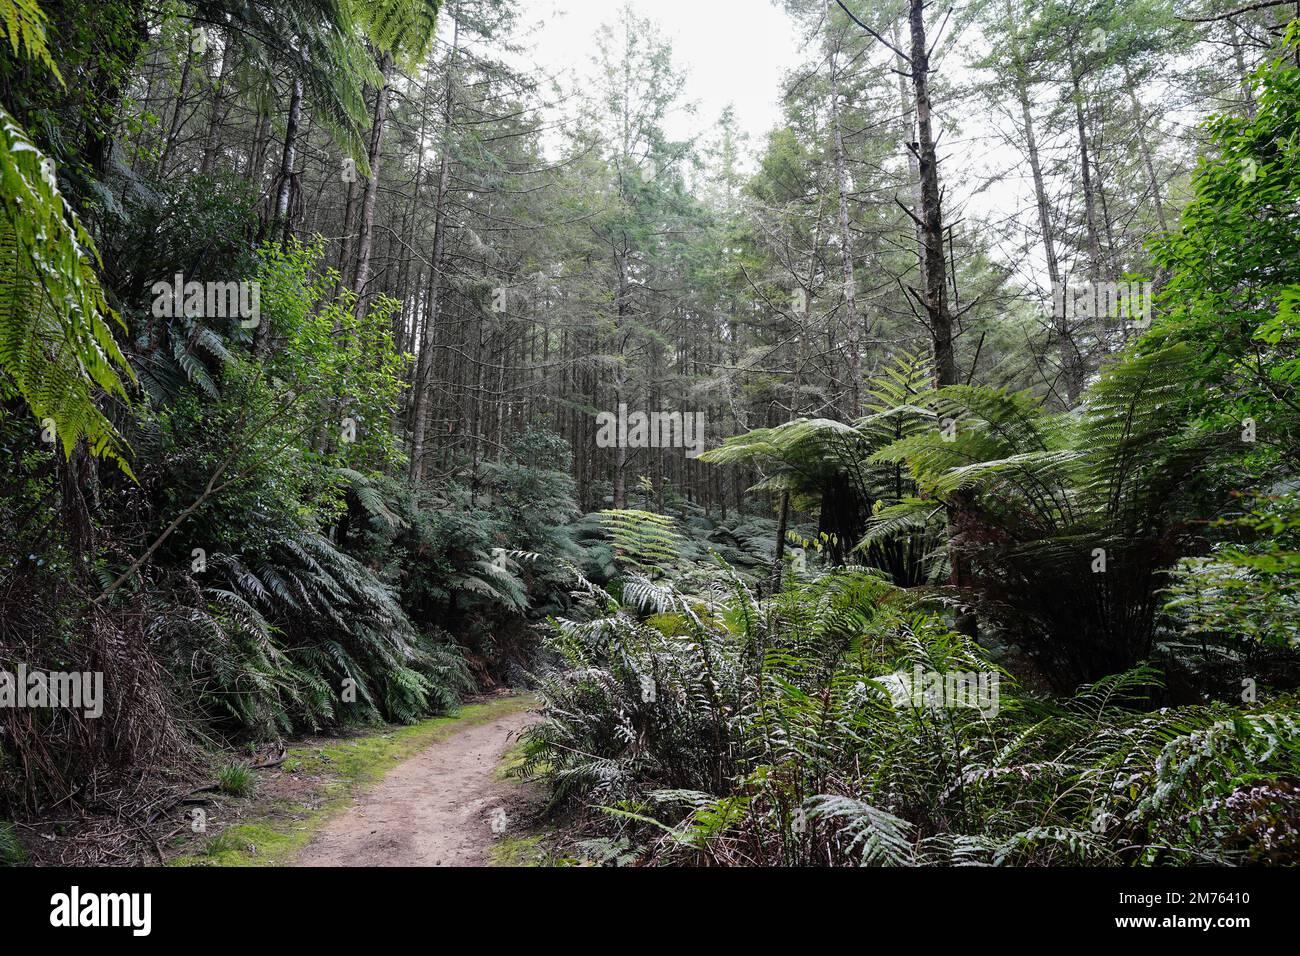 Whakarewarewa forest in Rotorua, New Zealand featuring a collection of Californian Coastal Redwoods Stock Photo